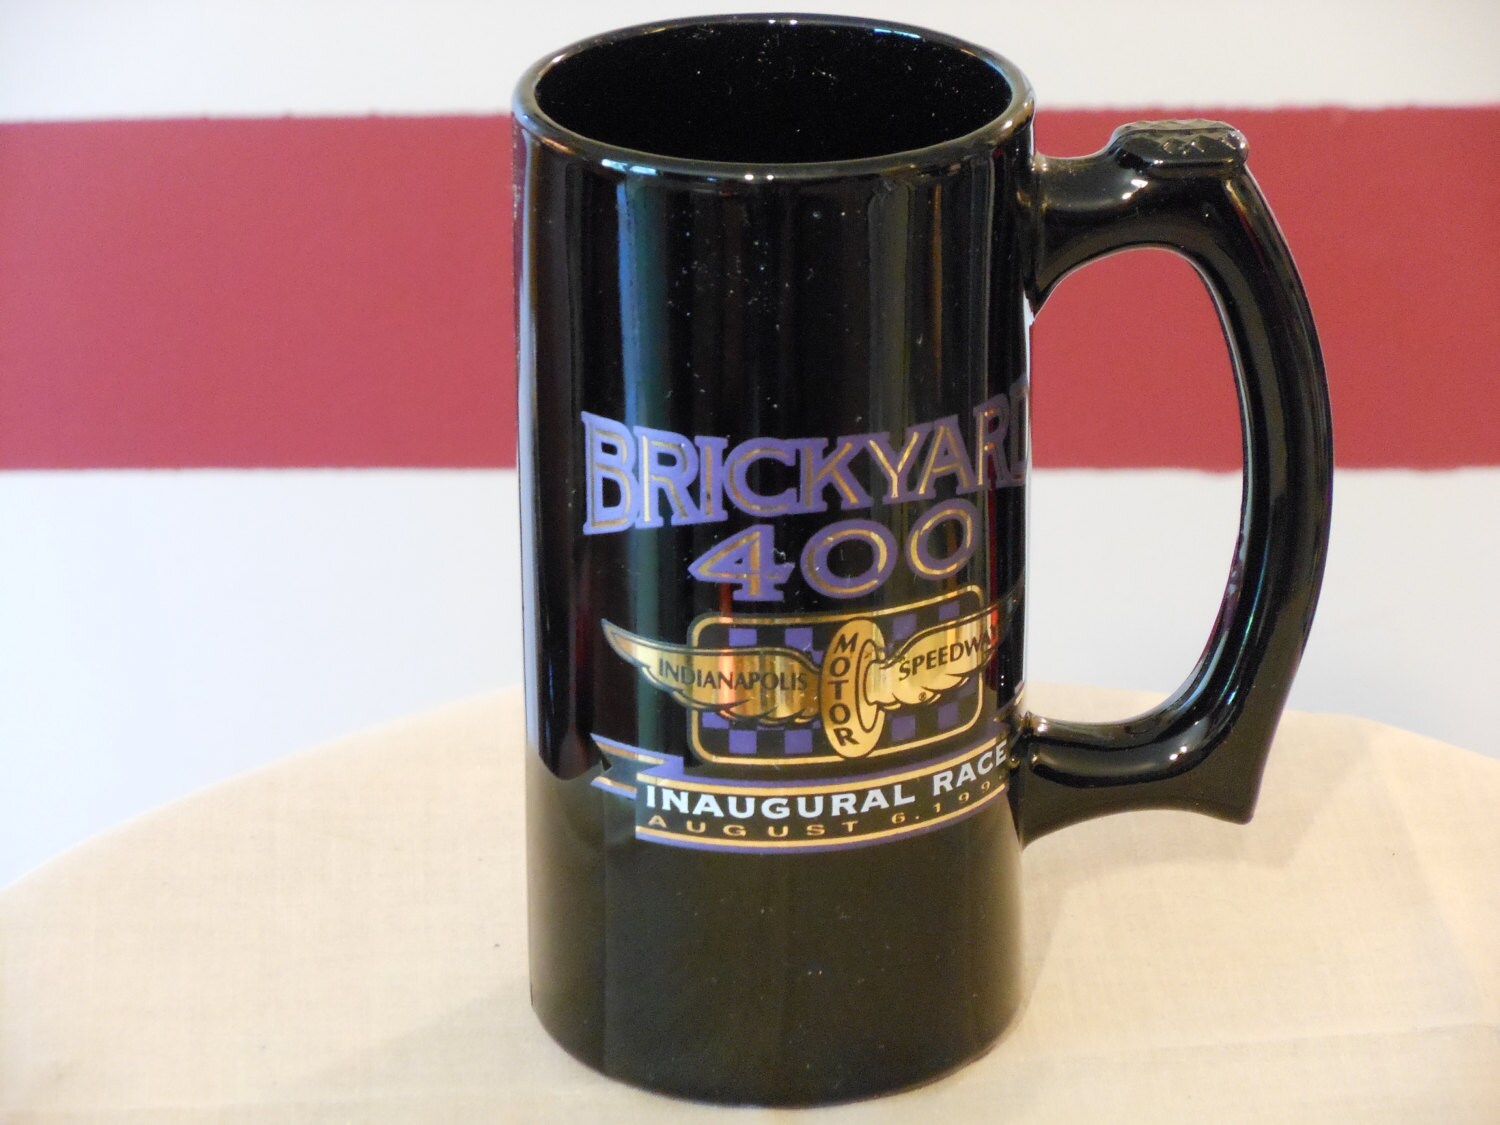 Brickyard 400 Inaugural Race Mug (1994)